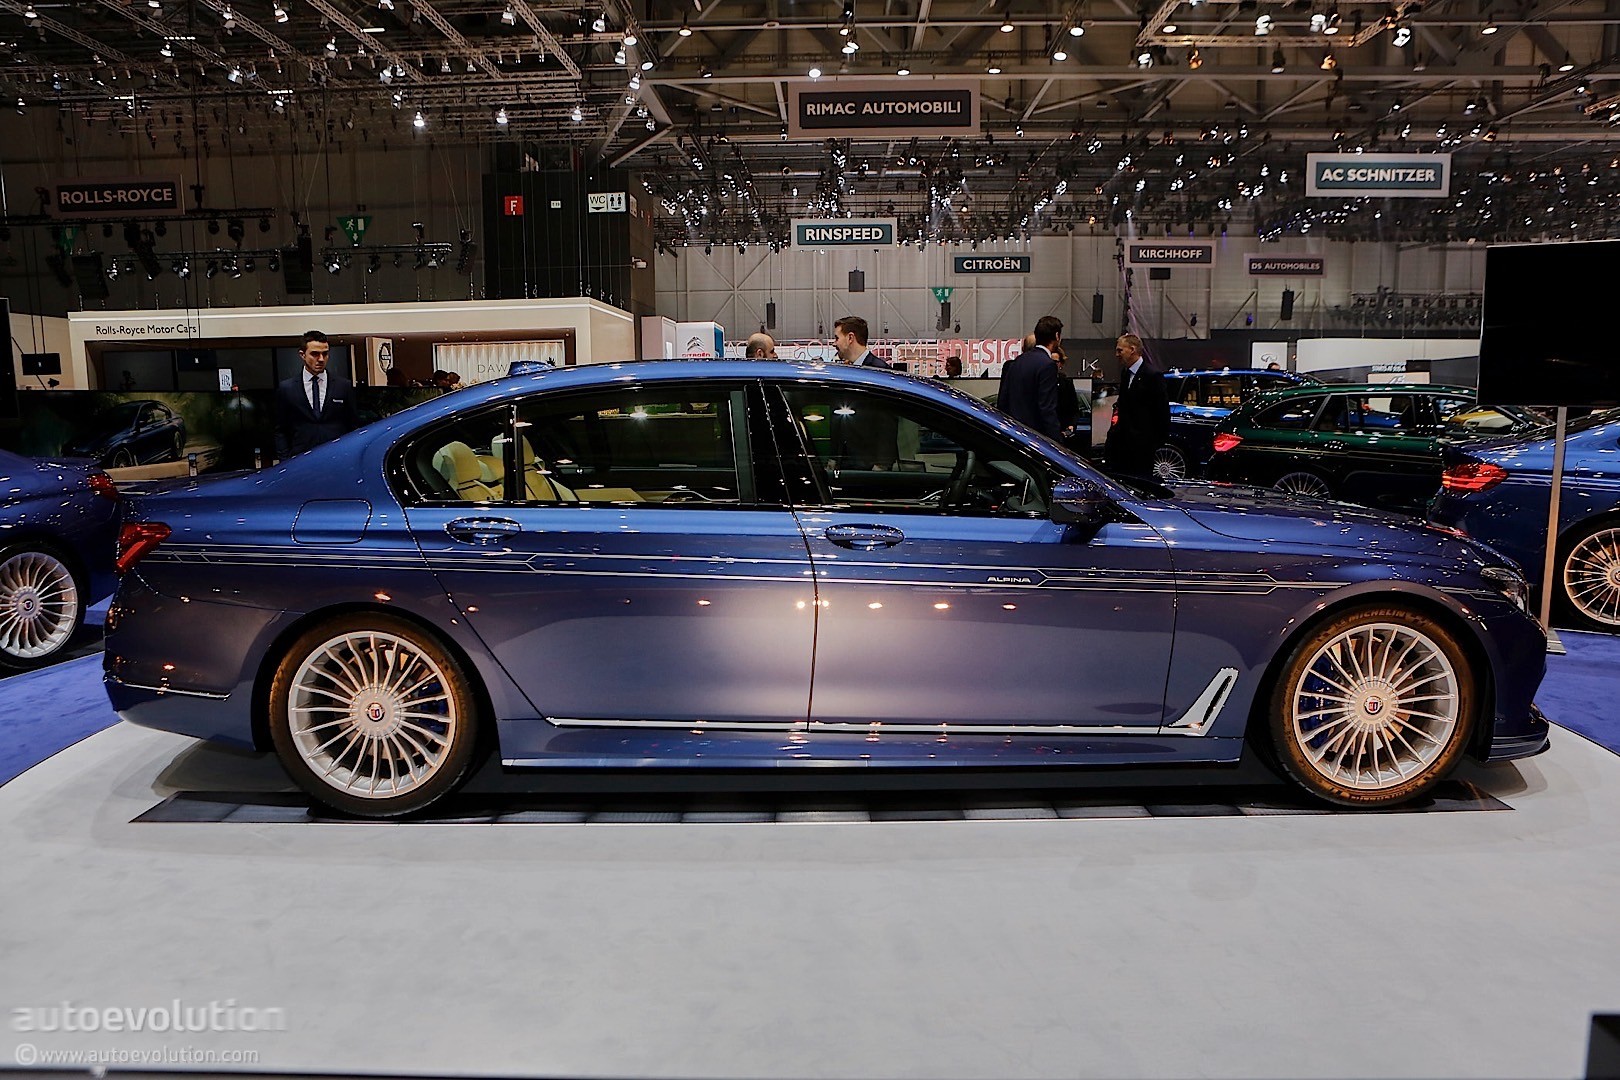 608 HP BMW Alpina B7 BiTurbo Looks Quietly Elegant Under